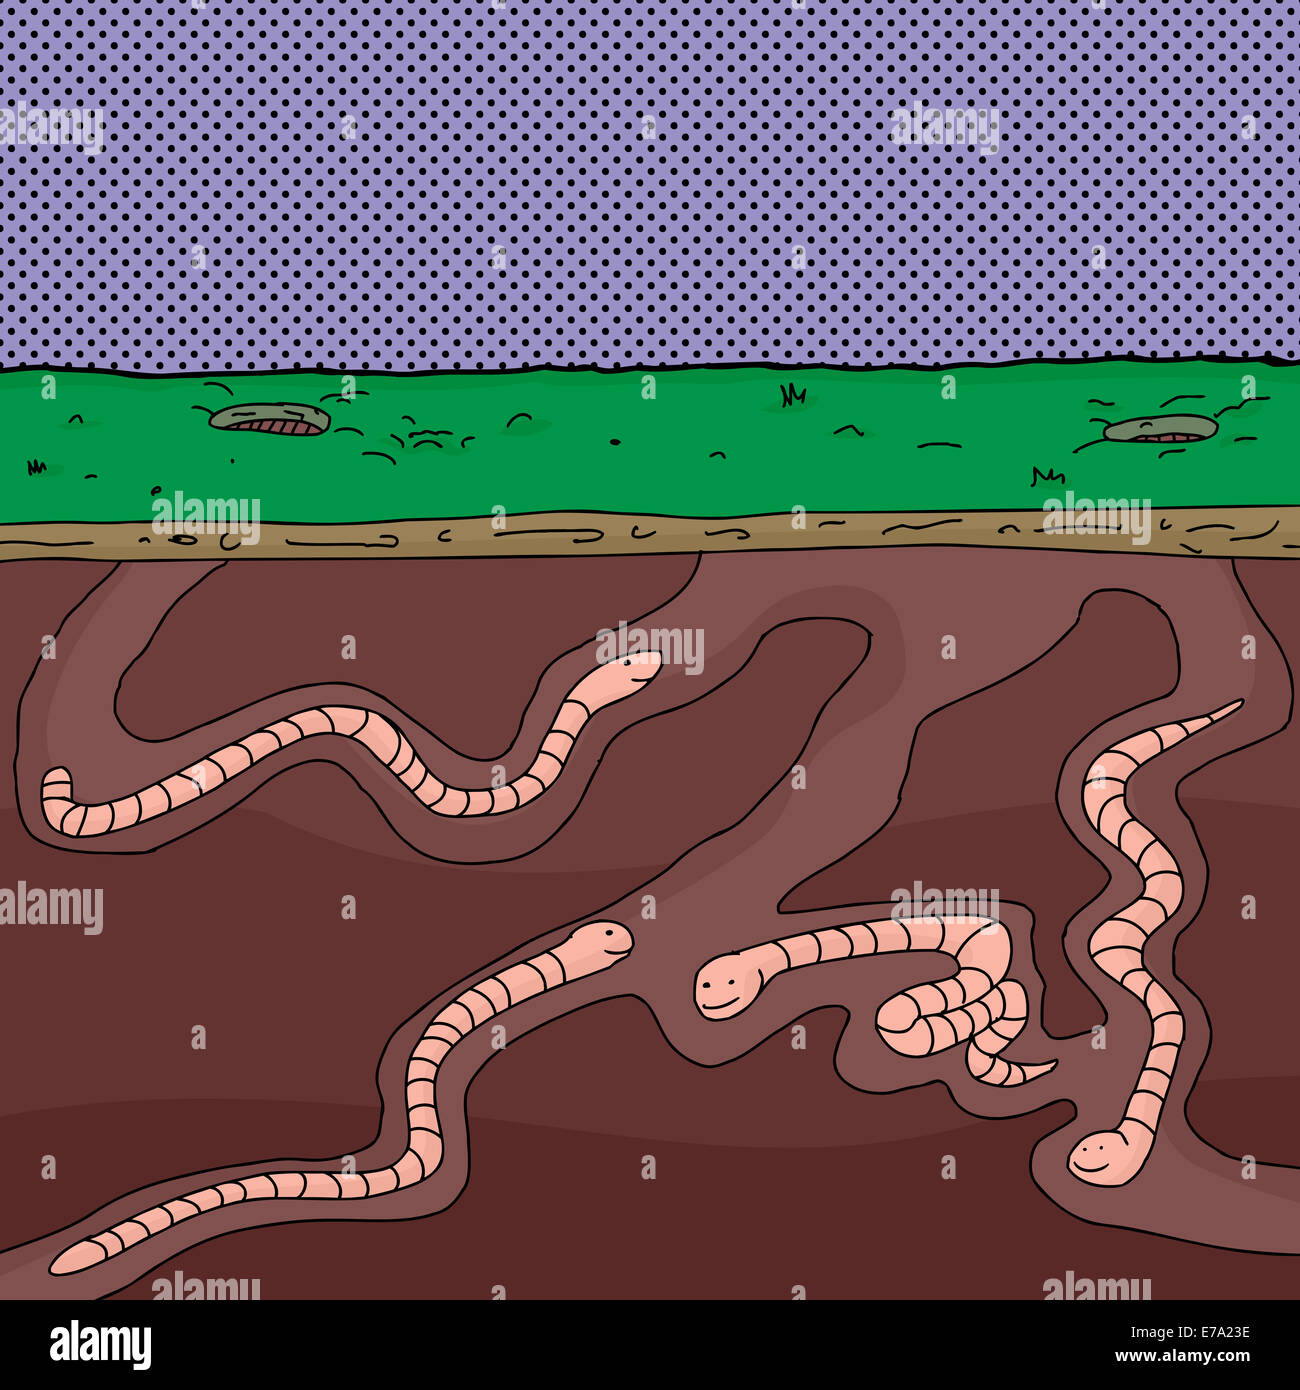 Four cartoon worms digging underground through tunnels Stock Photo